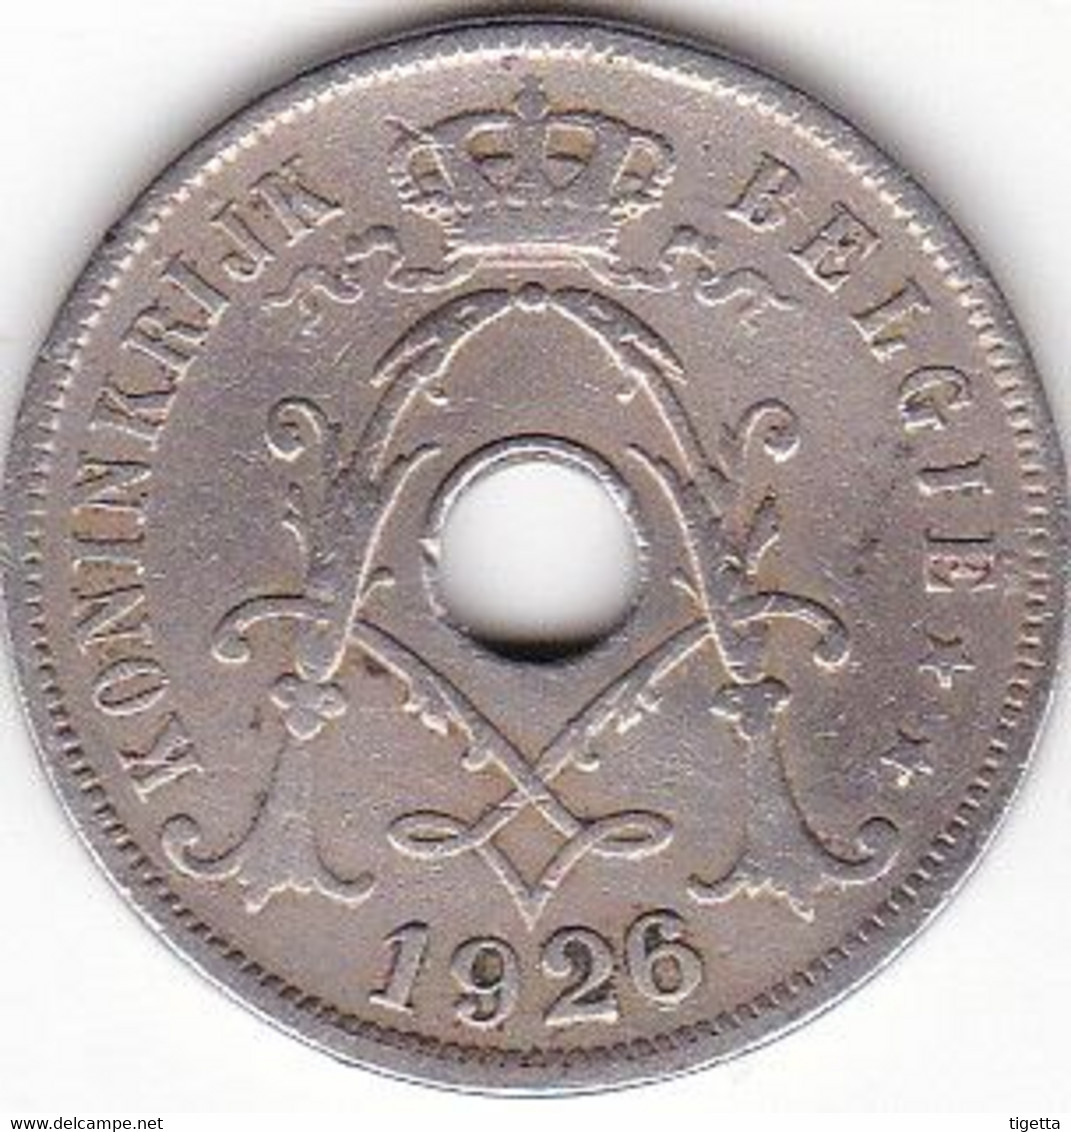 BELGIO 25 CENTS  ANNO 1926 - 25 Cents